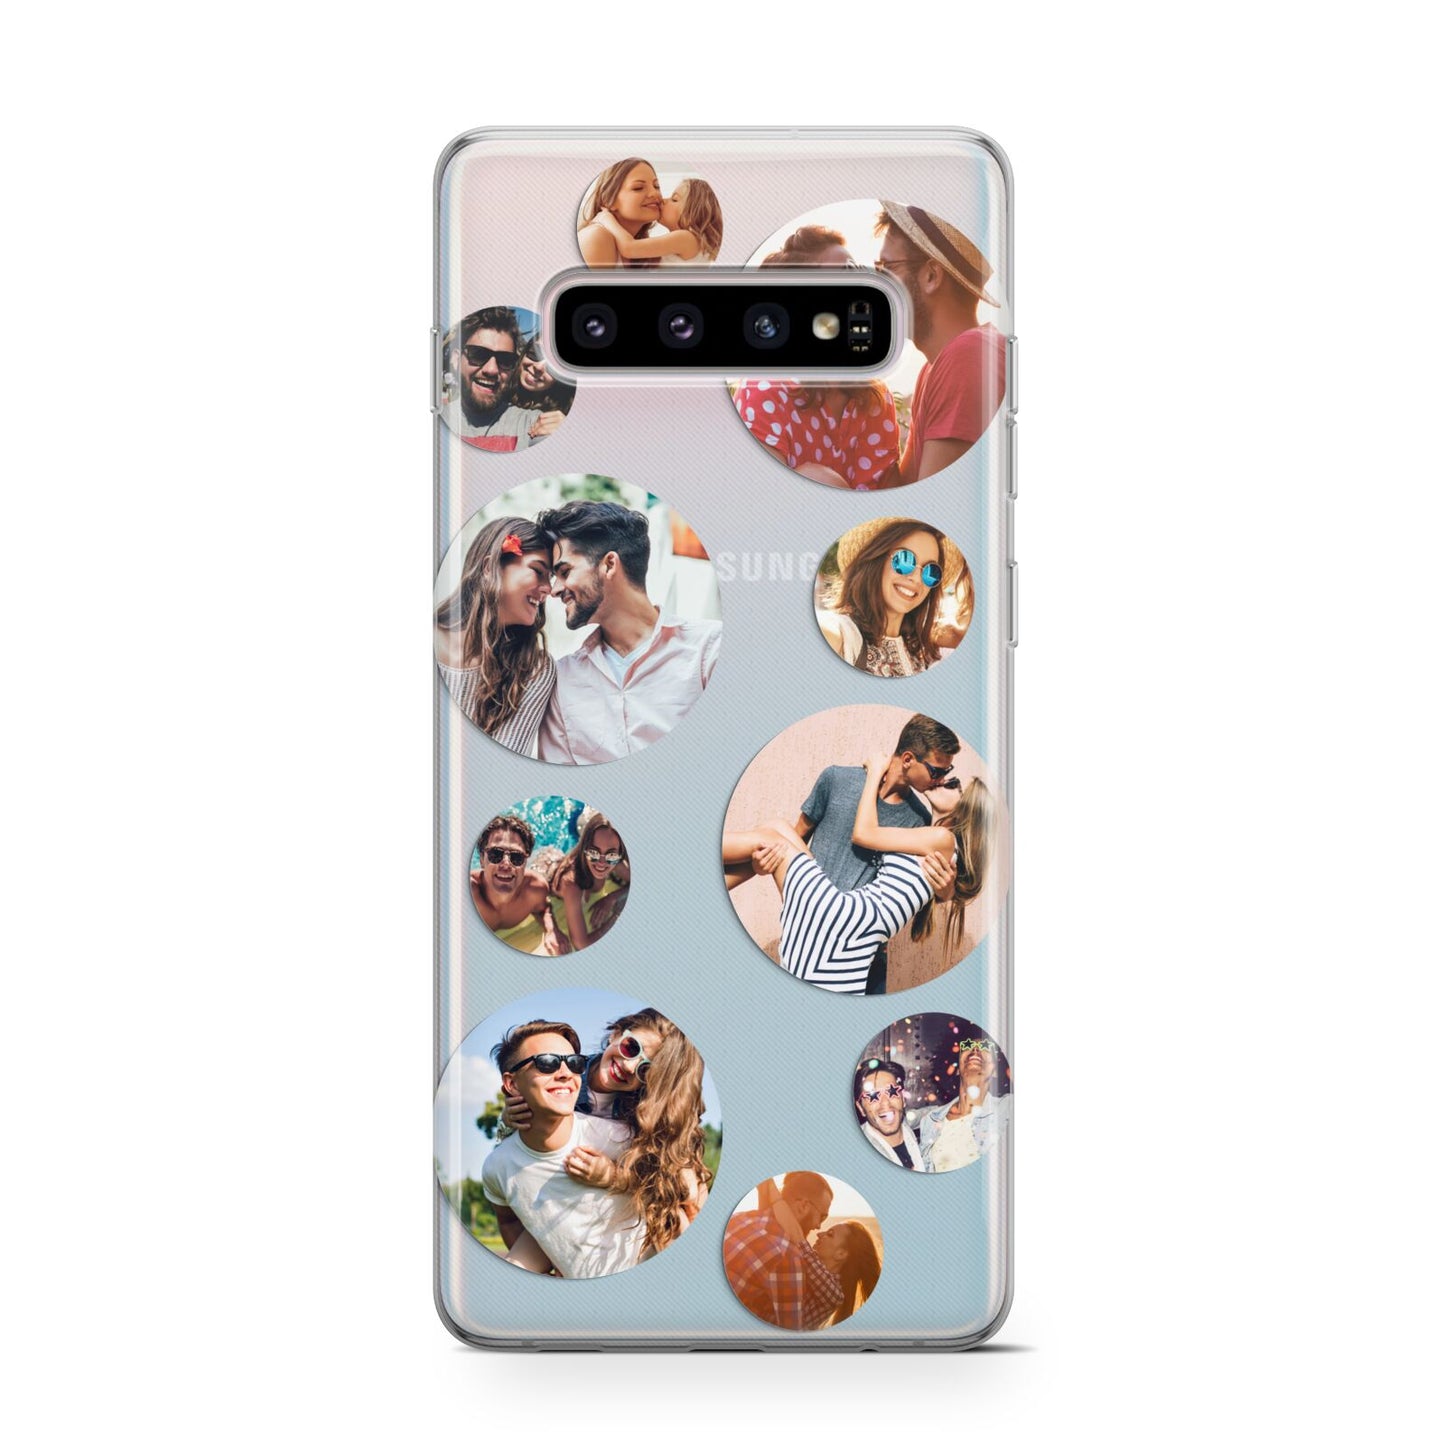 Multi Circular Photo Collage Upload Samsung Galaxy S10 Case